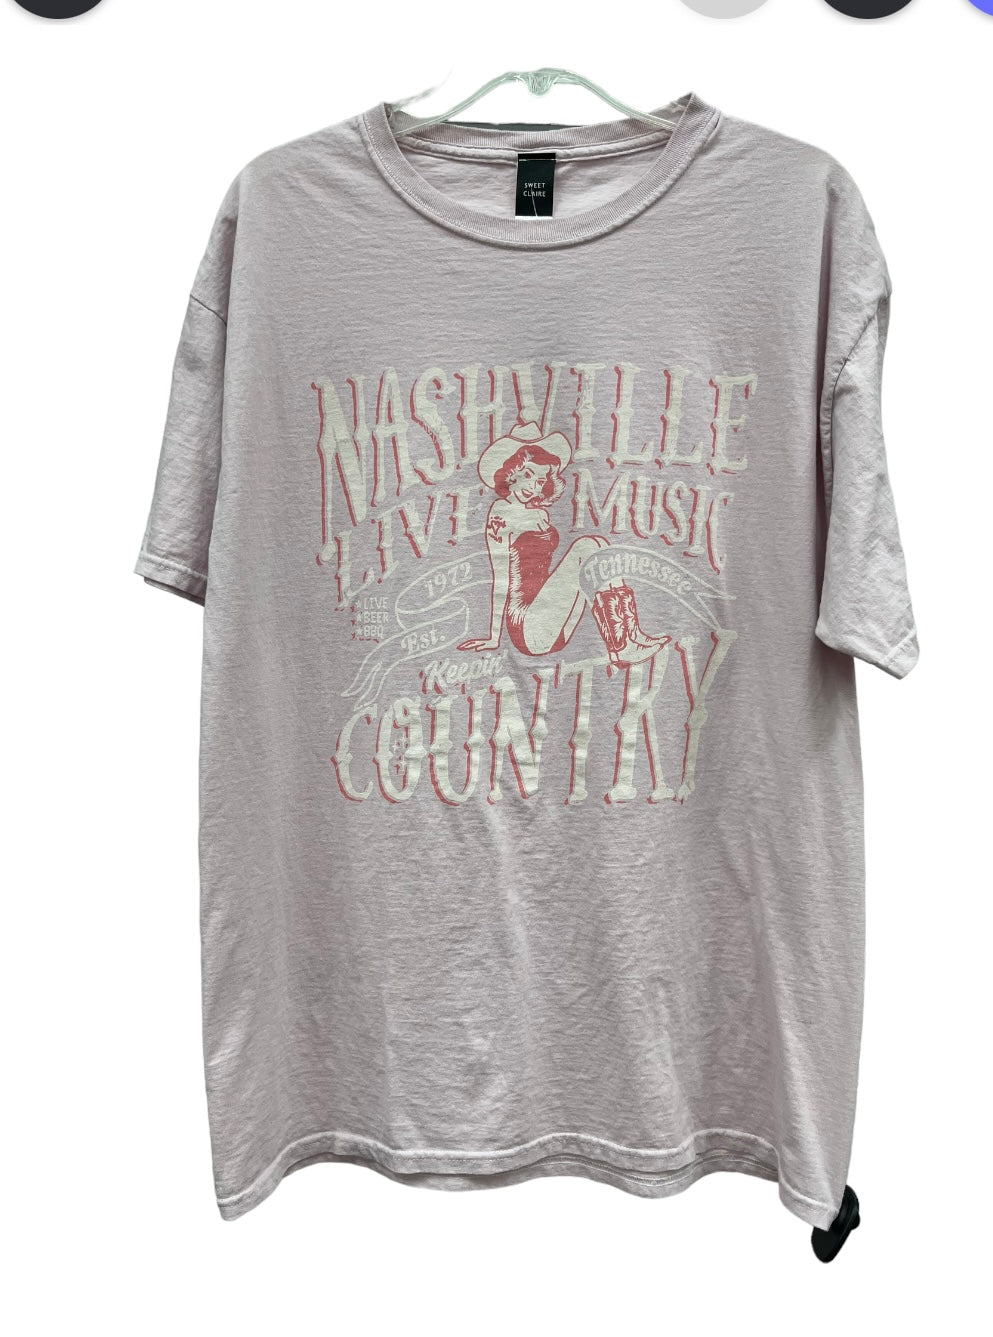 Nashville music shirt